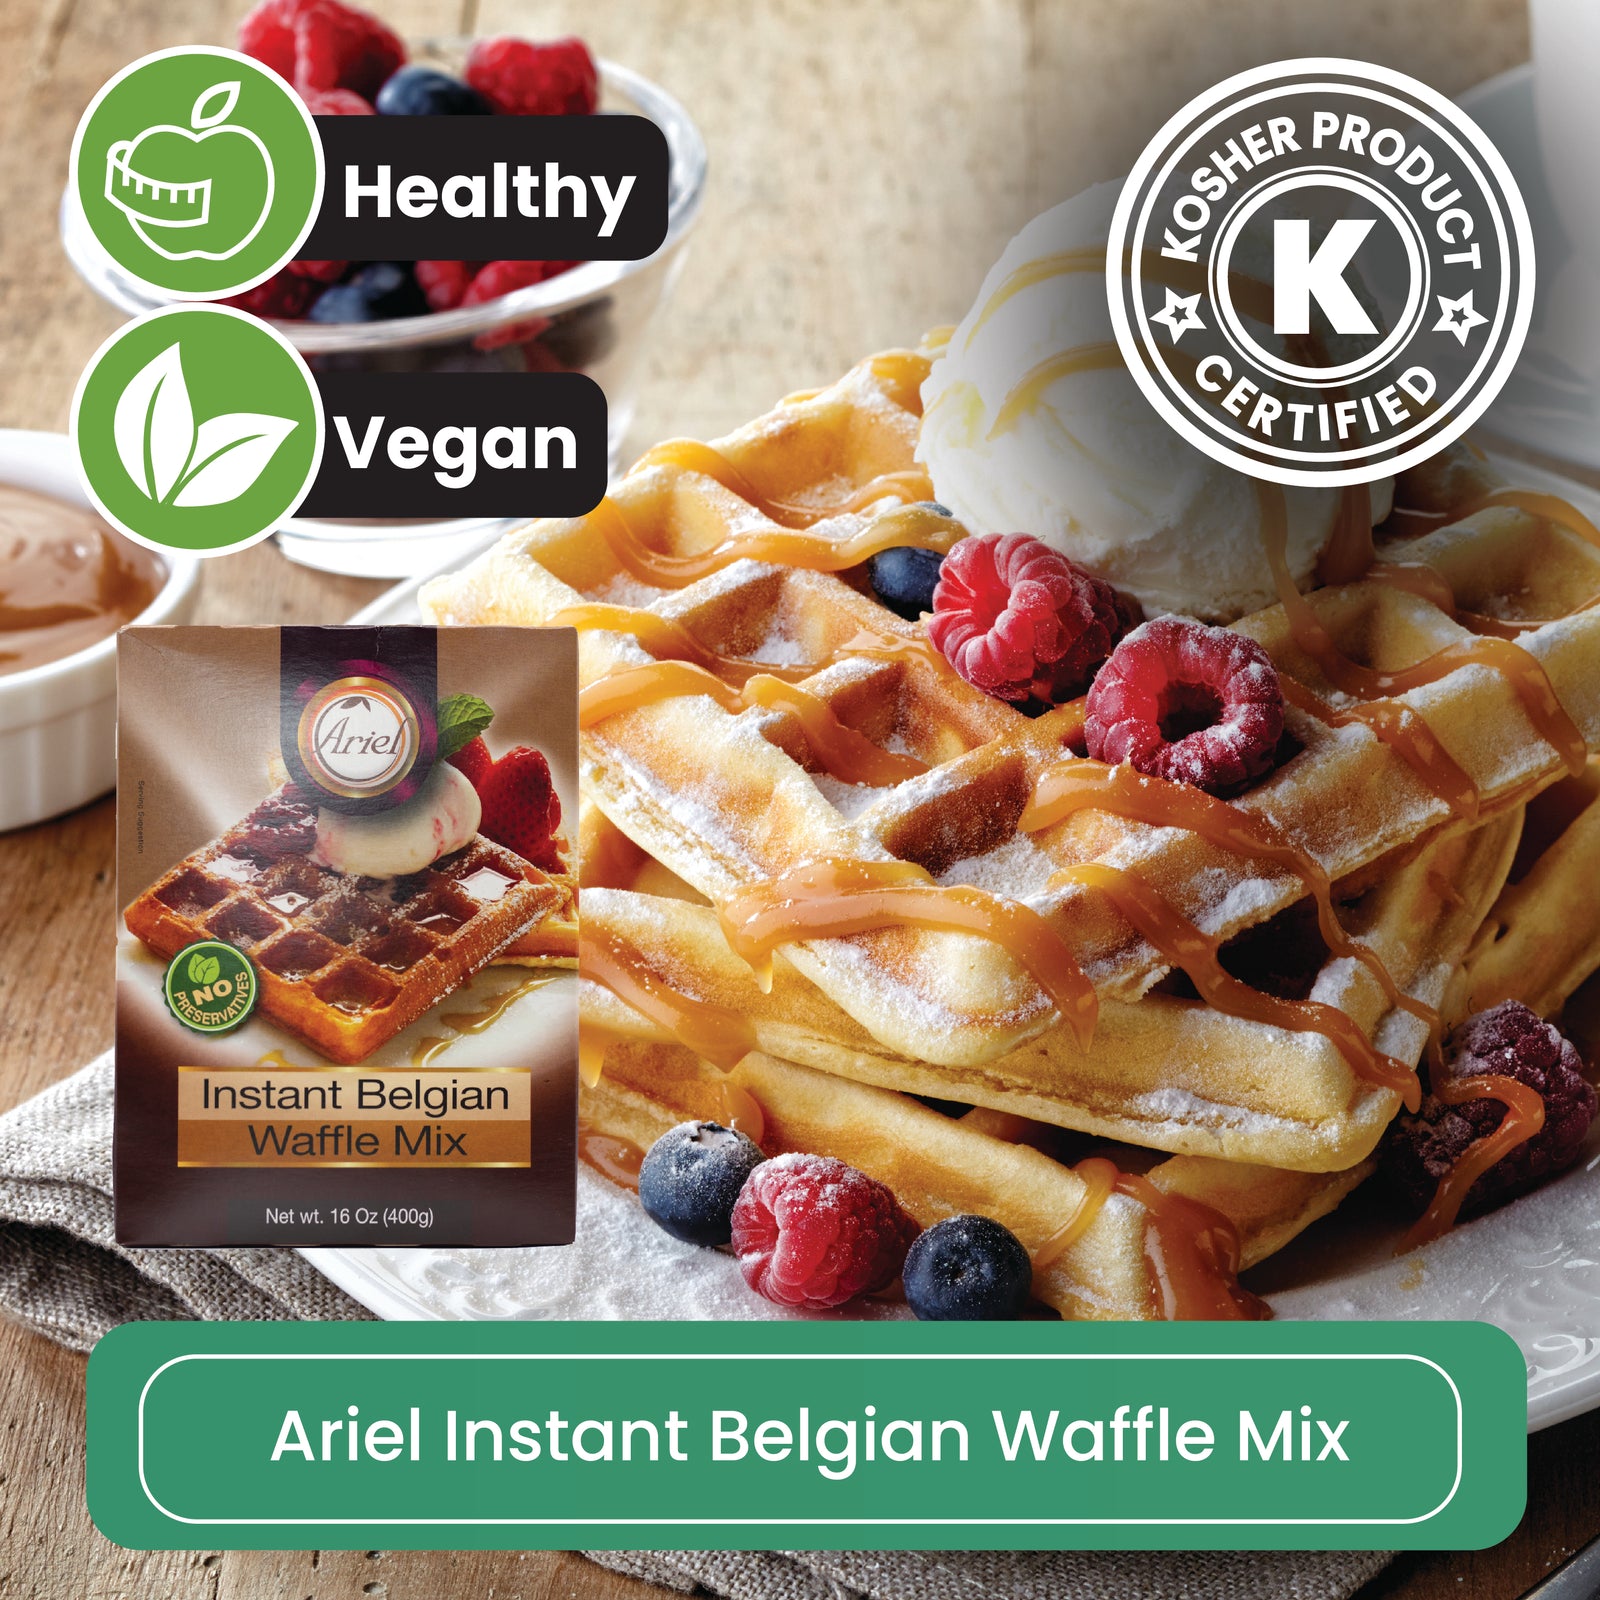 Ariel Instant Belgian Waffle Mix